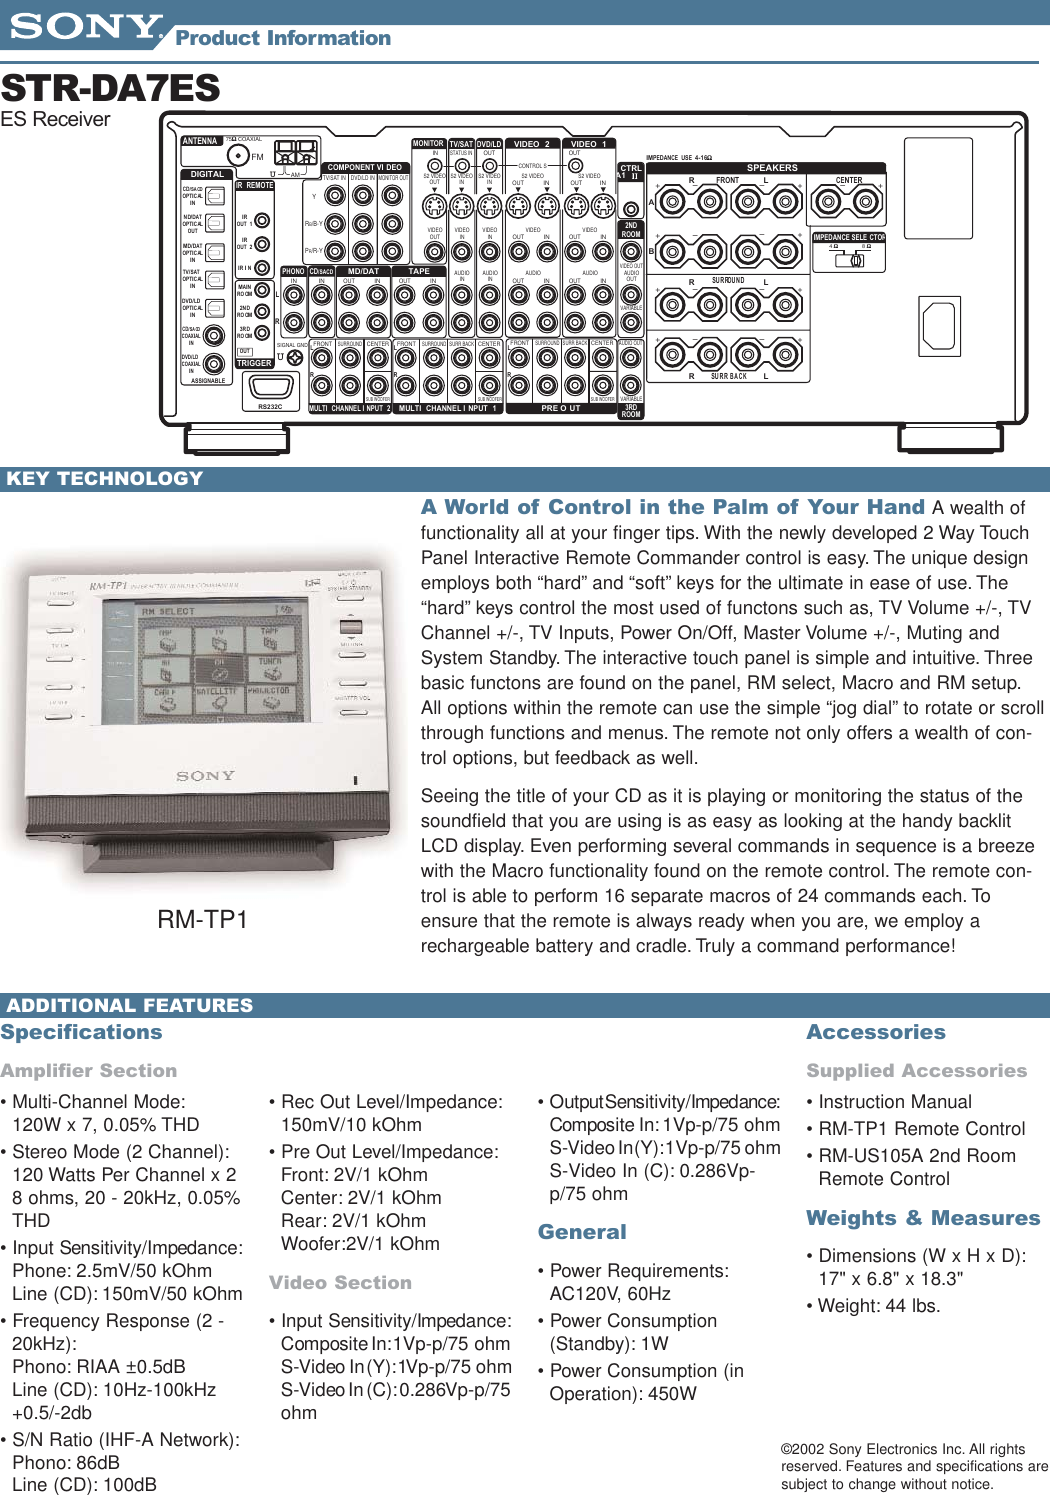 Page 2 of 2 - Sony STR-DA7ES Receivers_Info_Sheets_1 User Manual Marketing Specifications STRDA7ESspec